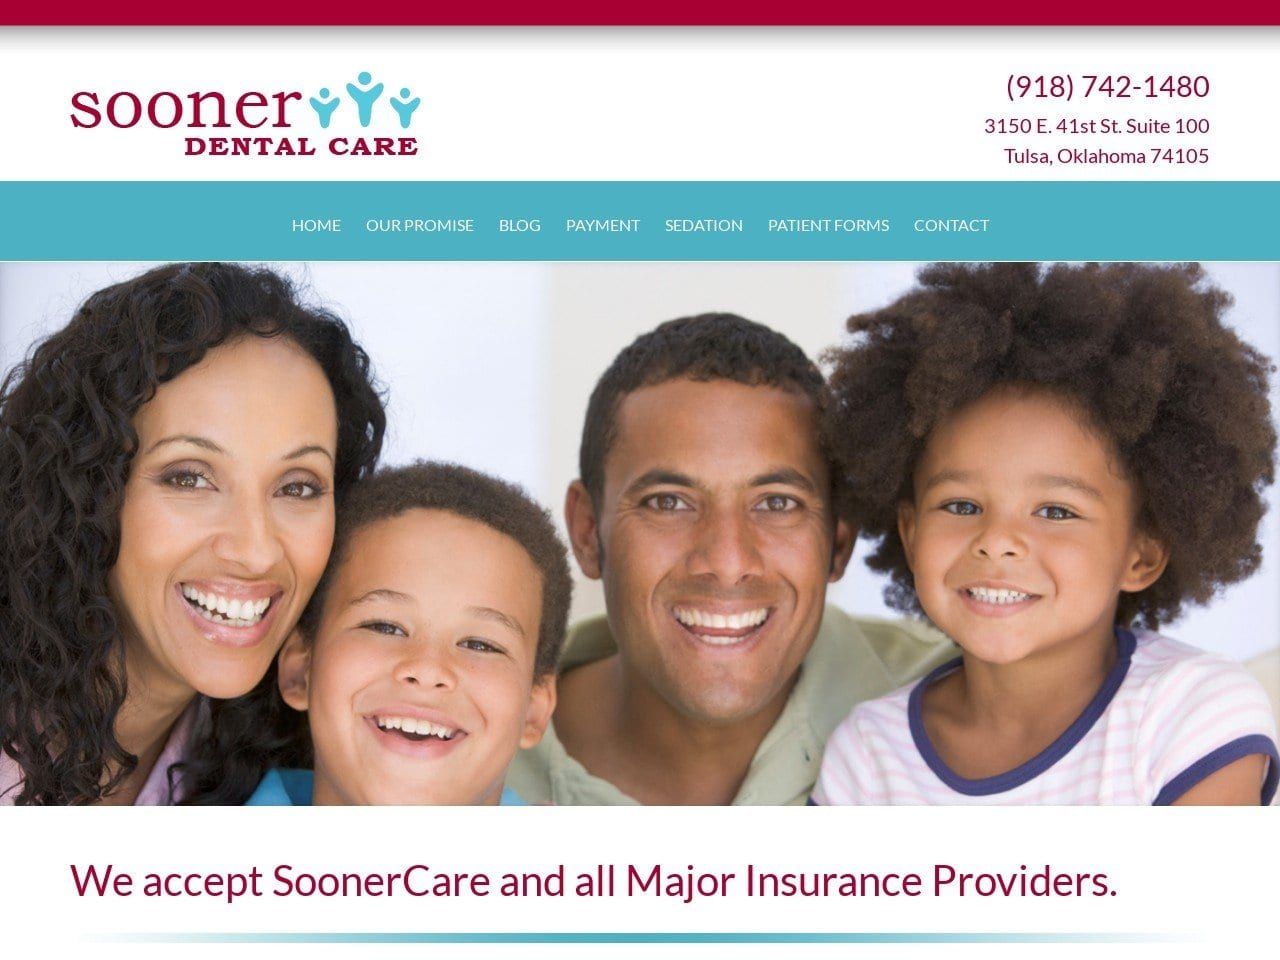 Sooner Dental Care Website Screenshot from soonerdentalcare.com